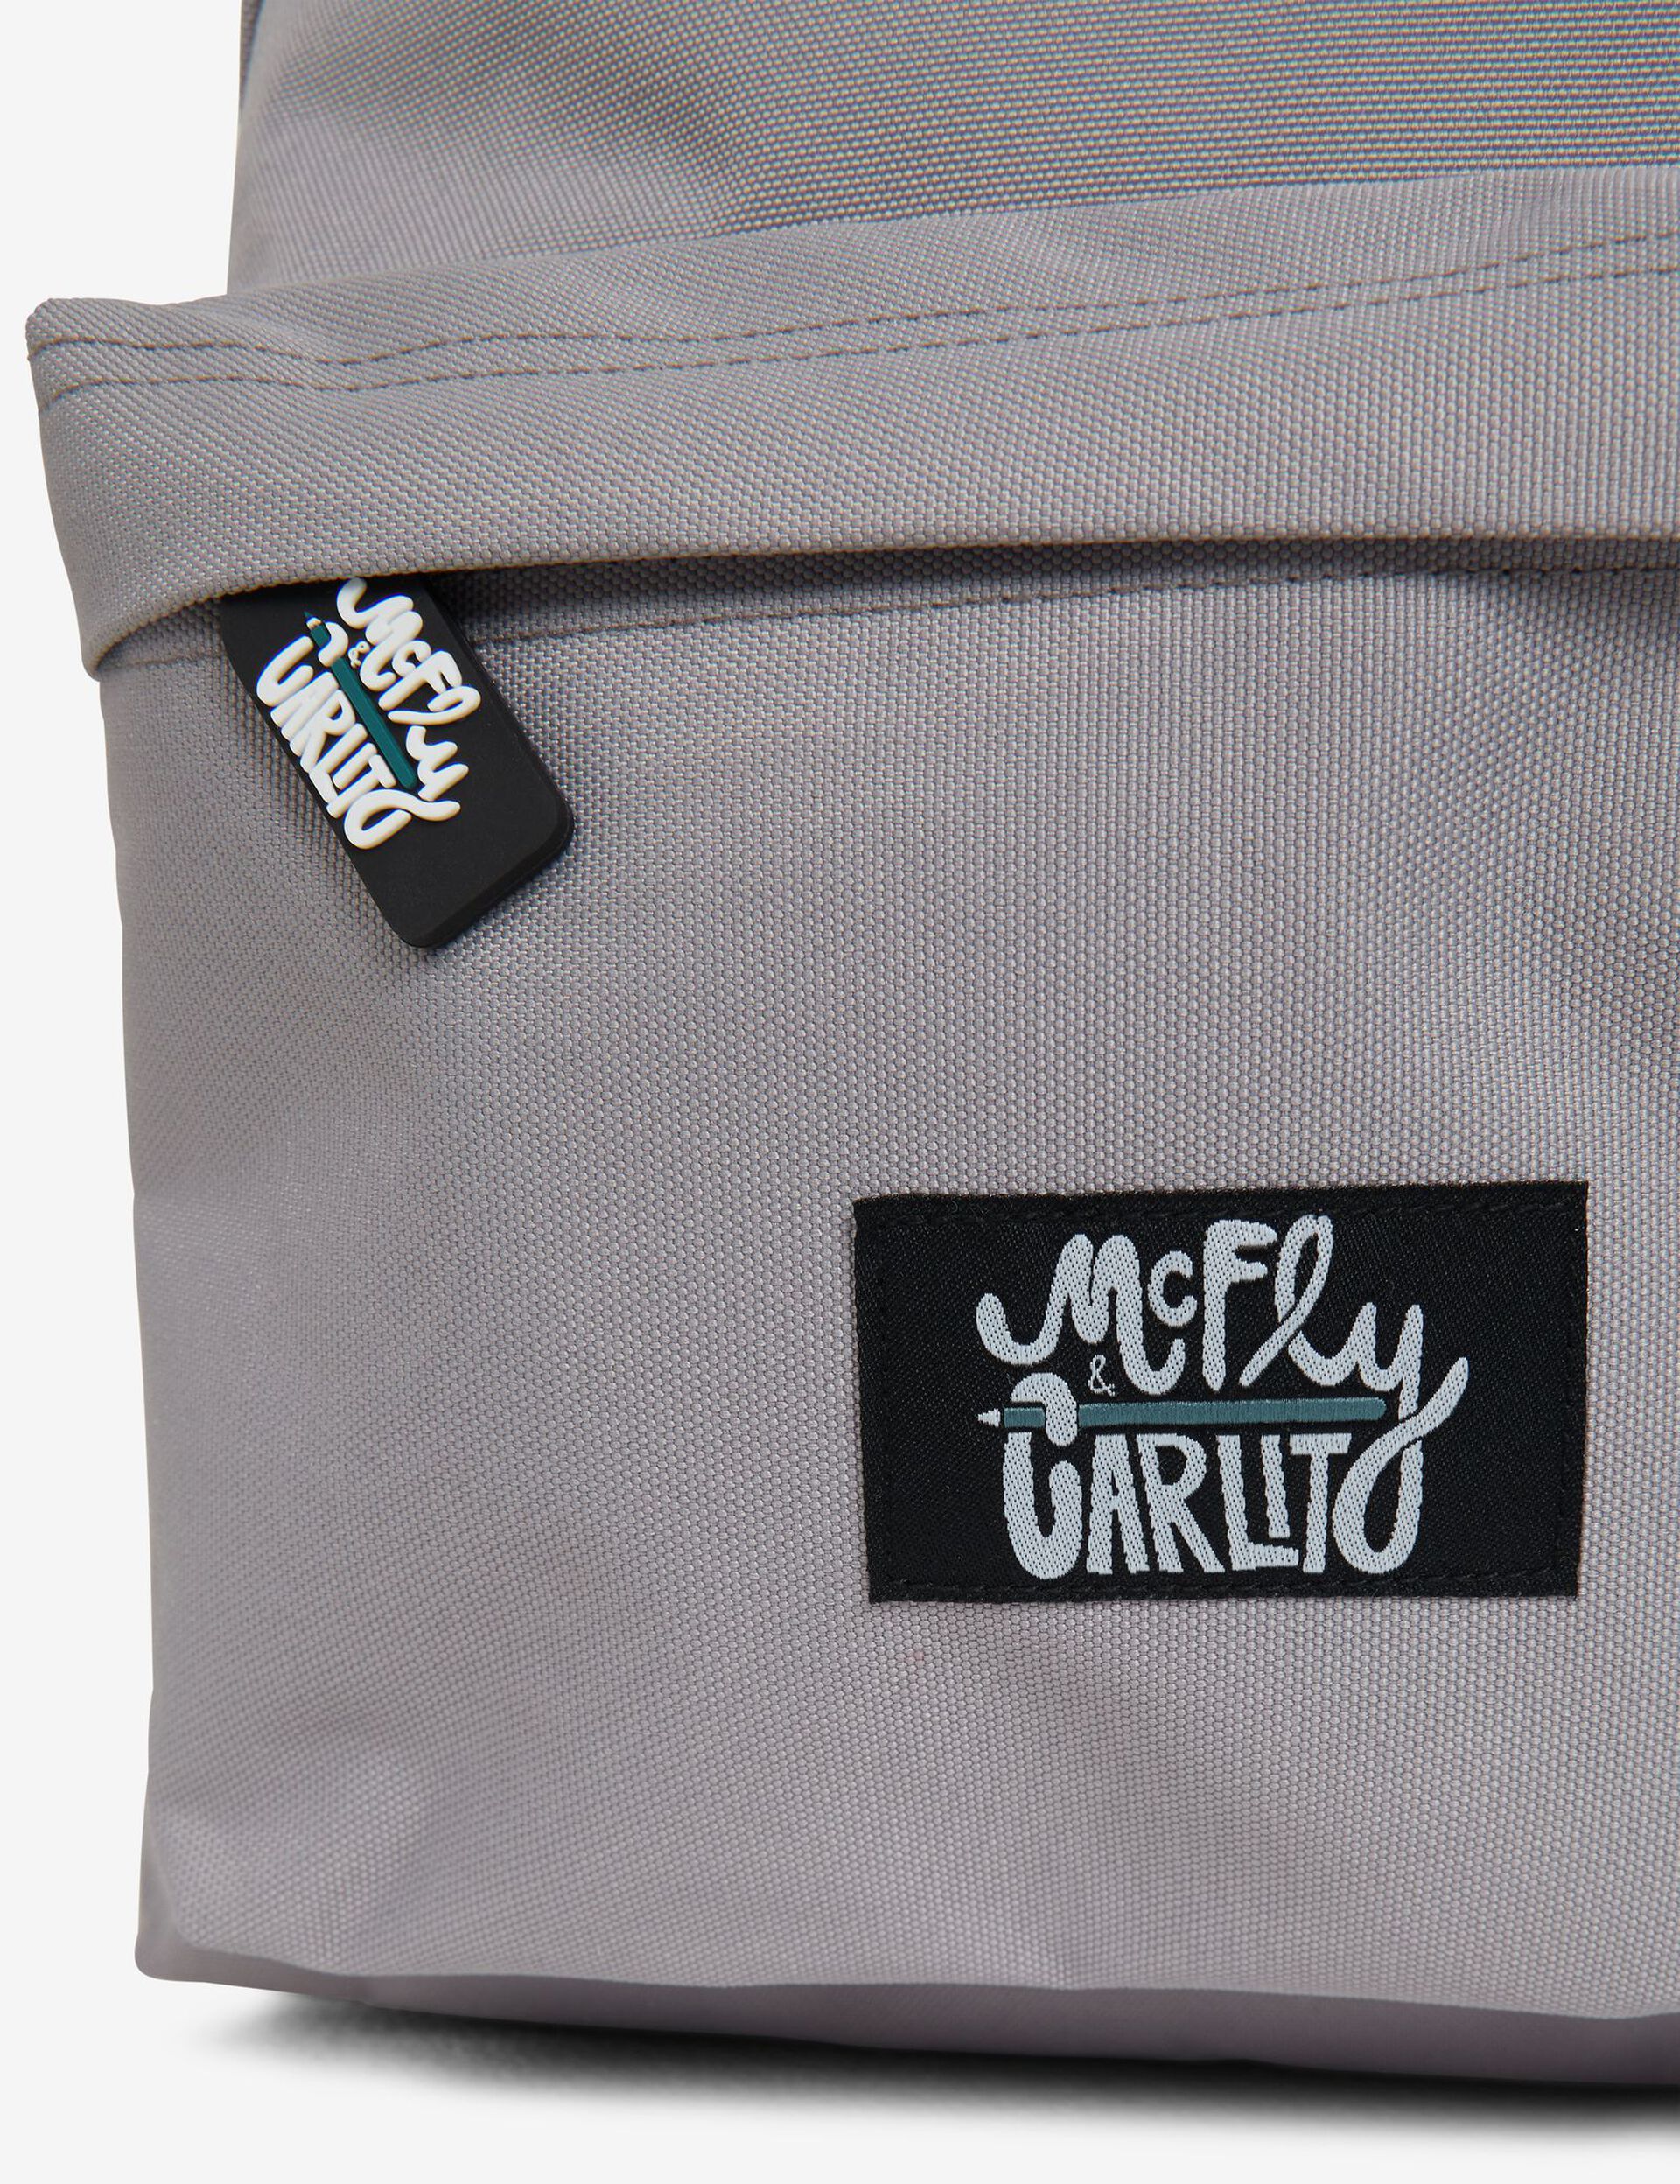 McFly & Carlito backpack